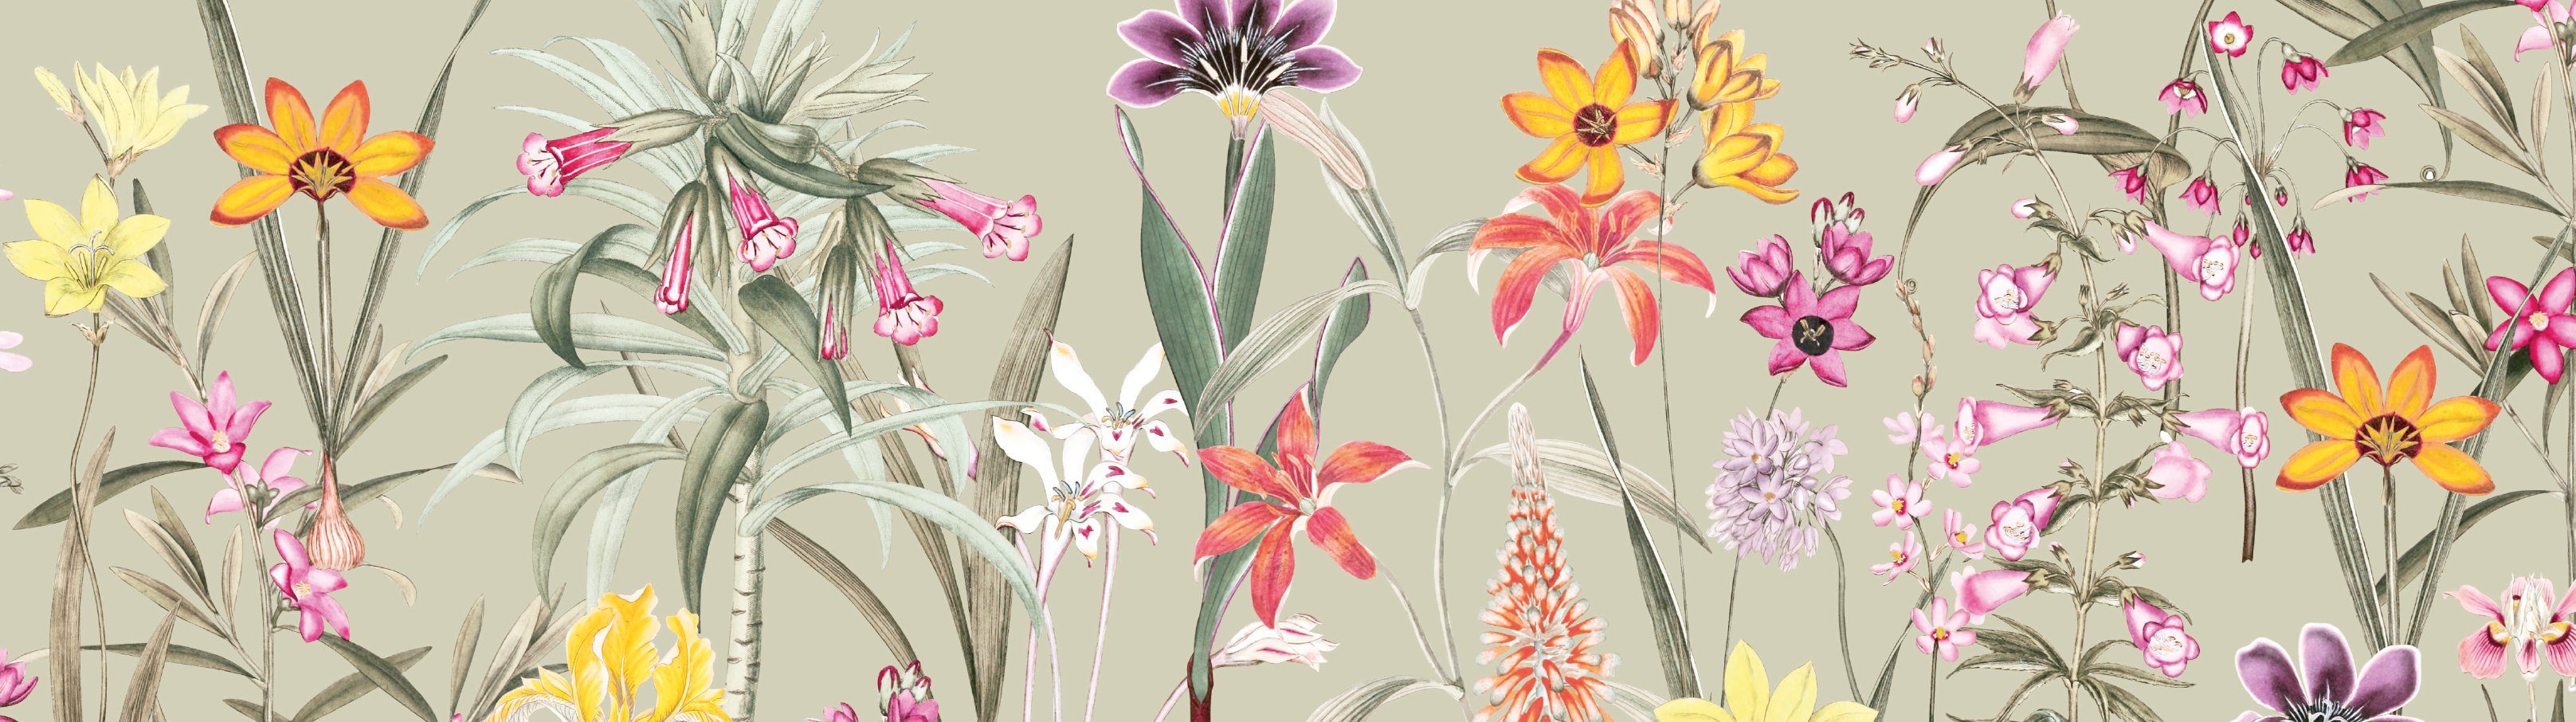 anna wand Bordüre Botanical Garden mehrfarbig/grün-beige / selbstklebend, - floral, - Blumen selbstklebend